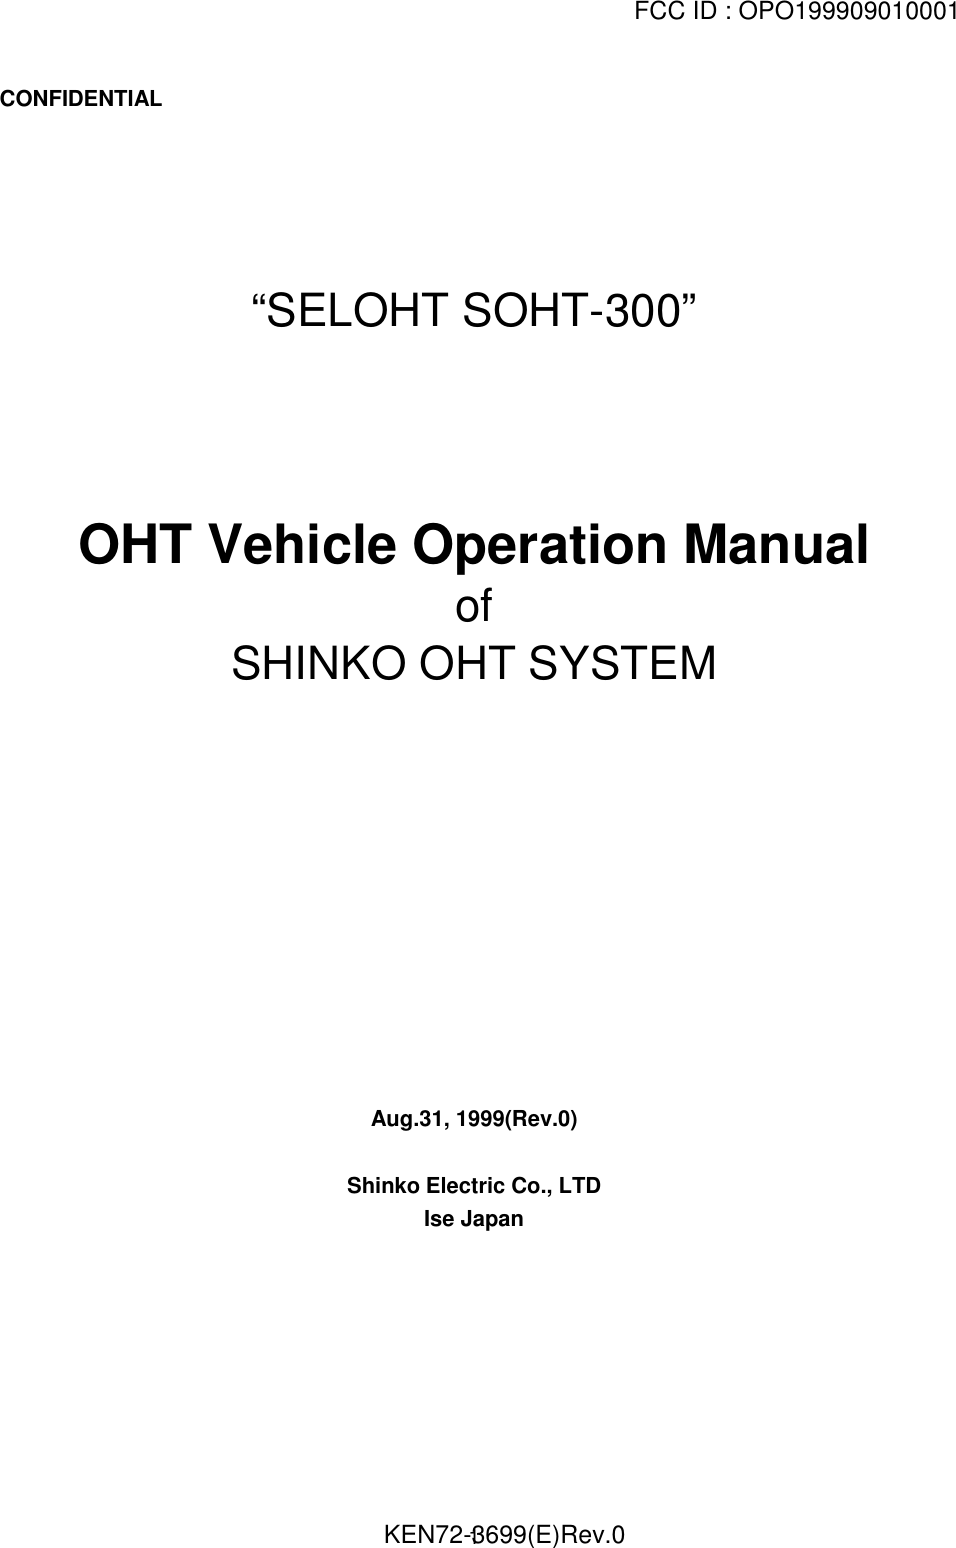 FCC ID : OPO199909010001                                                         KEN72-3699(E)Rev.01  CONFIDENTIAL“SELOHT SOHT-300”OHT Vehicle Operation ManualofSHINKO OHT SYSTEMAug.31, 1999(Rev.0)Shinko Electric Co., LTDIse Japan